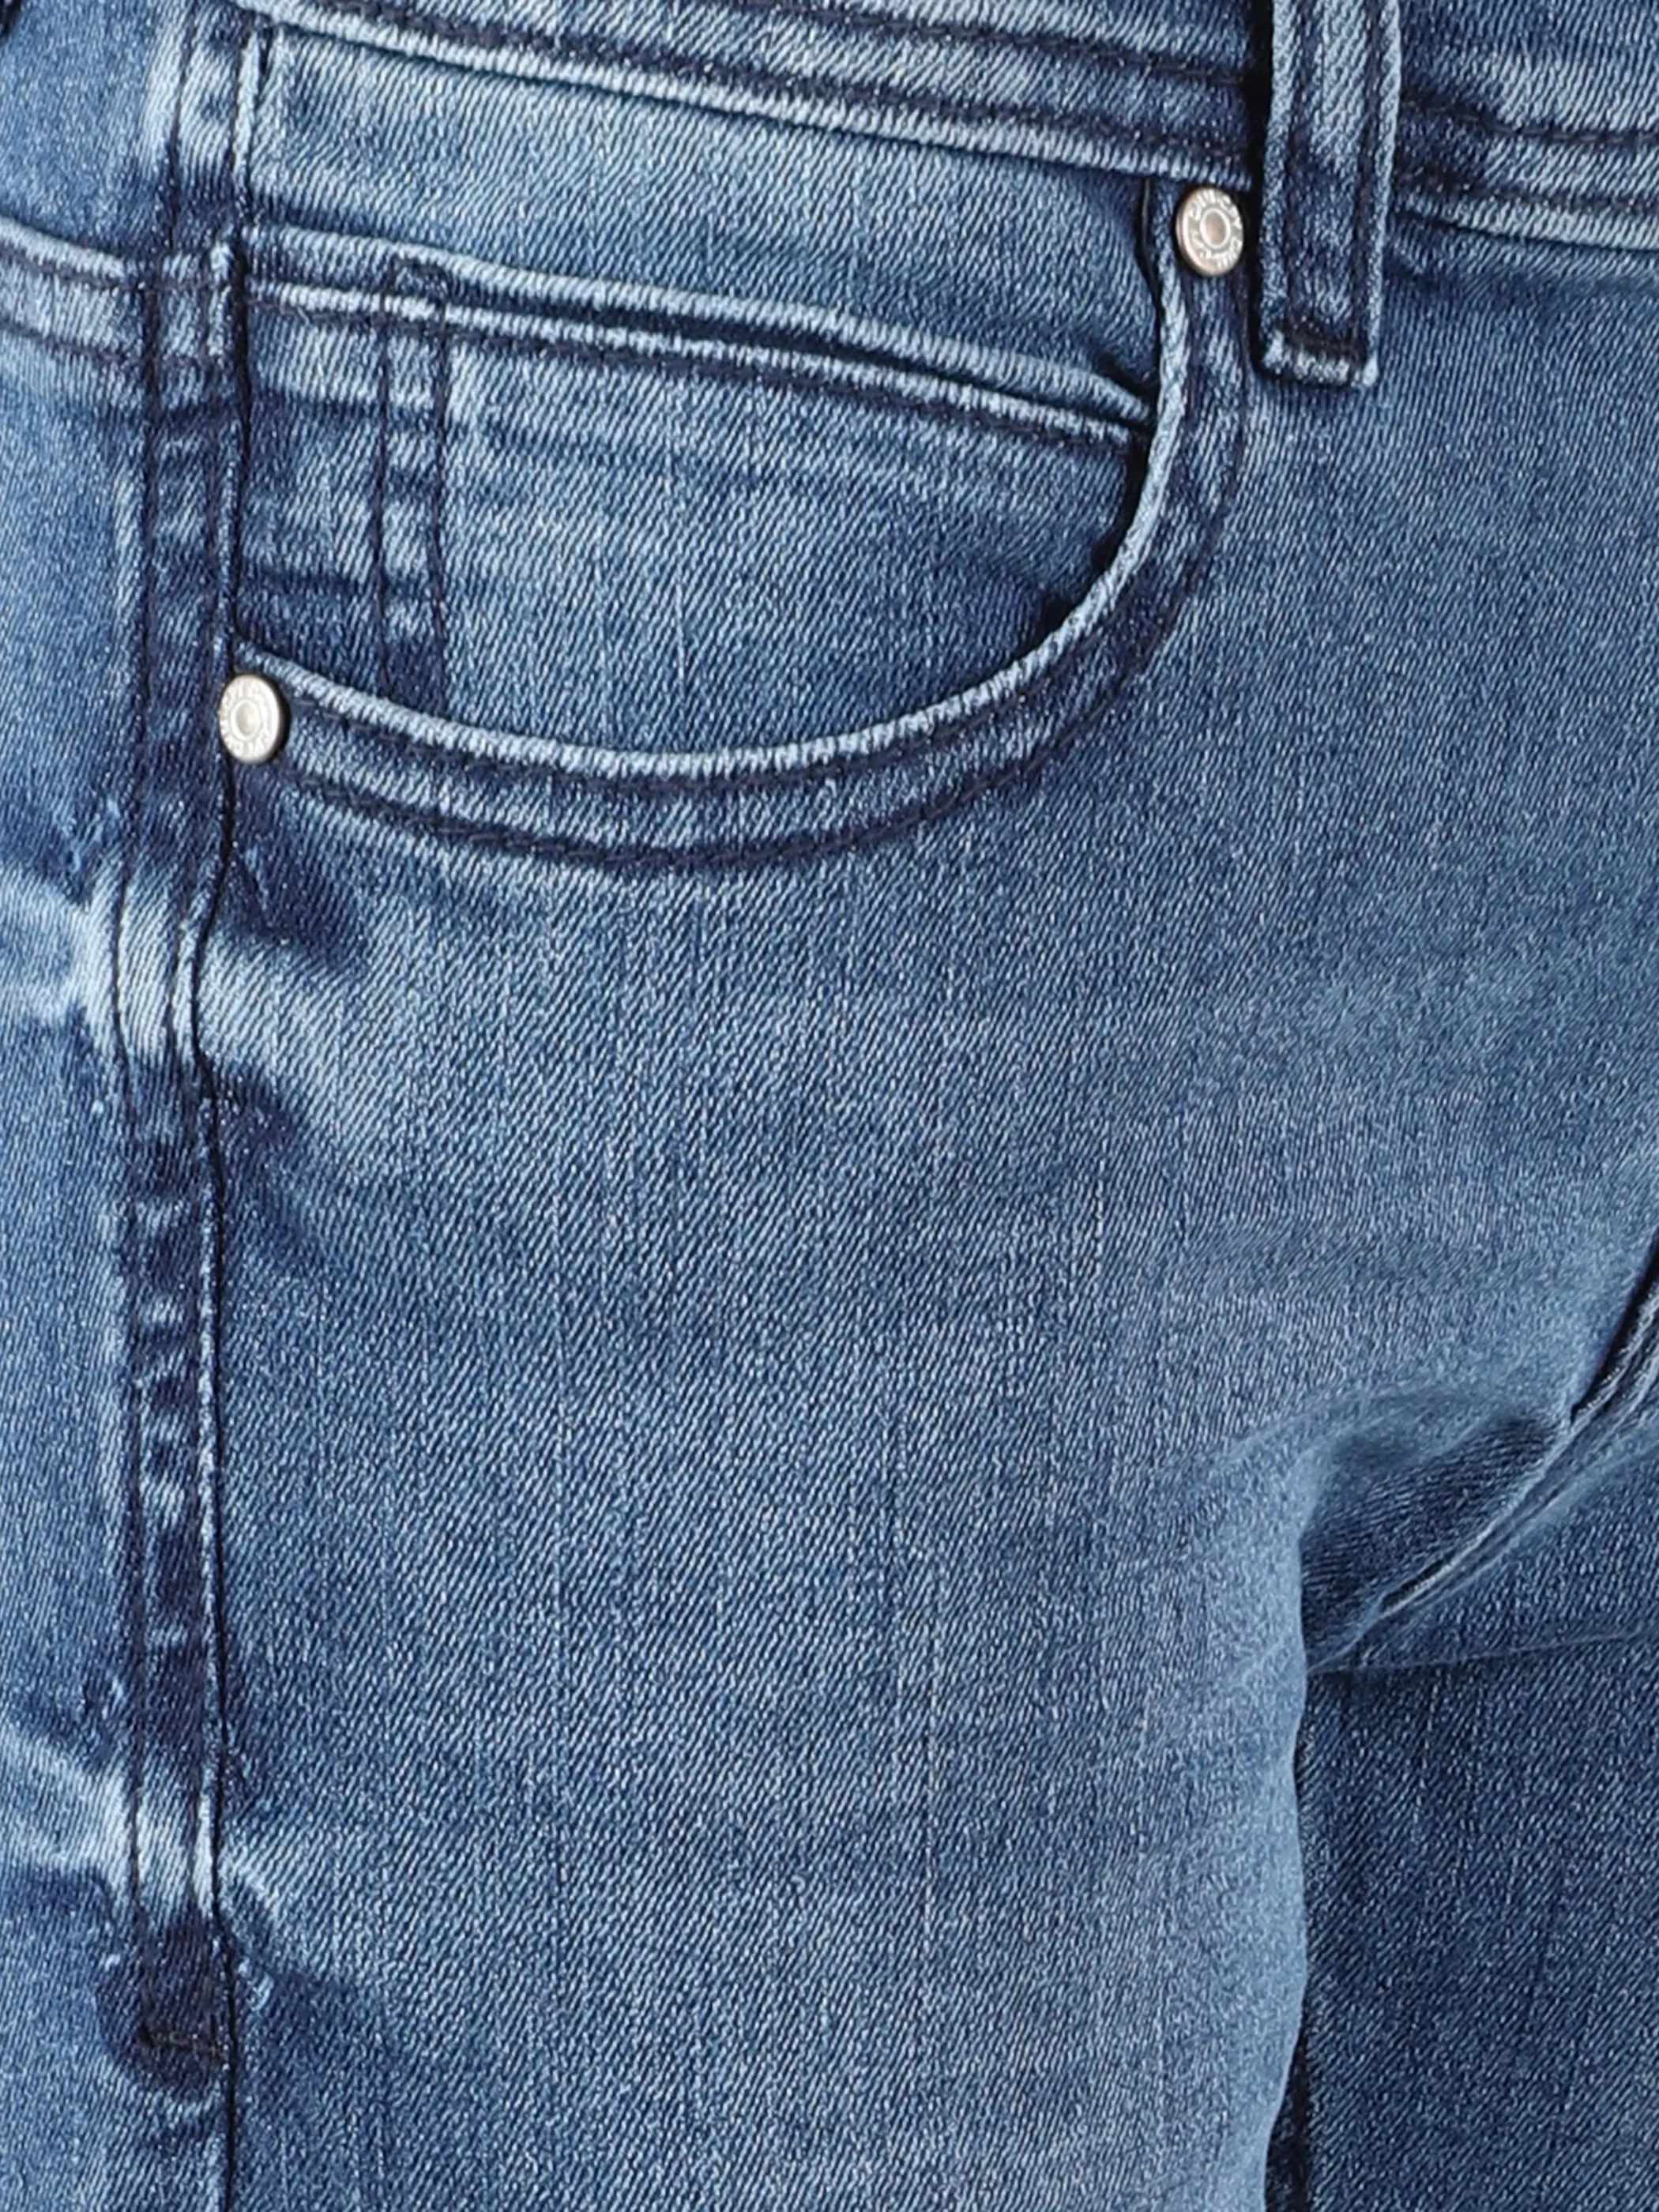 Stop + Go TB 5 Pocket Jeans in dunkel- Blau 868503 D.BLAU 3